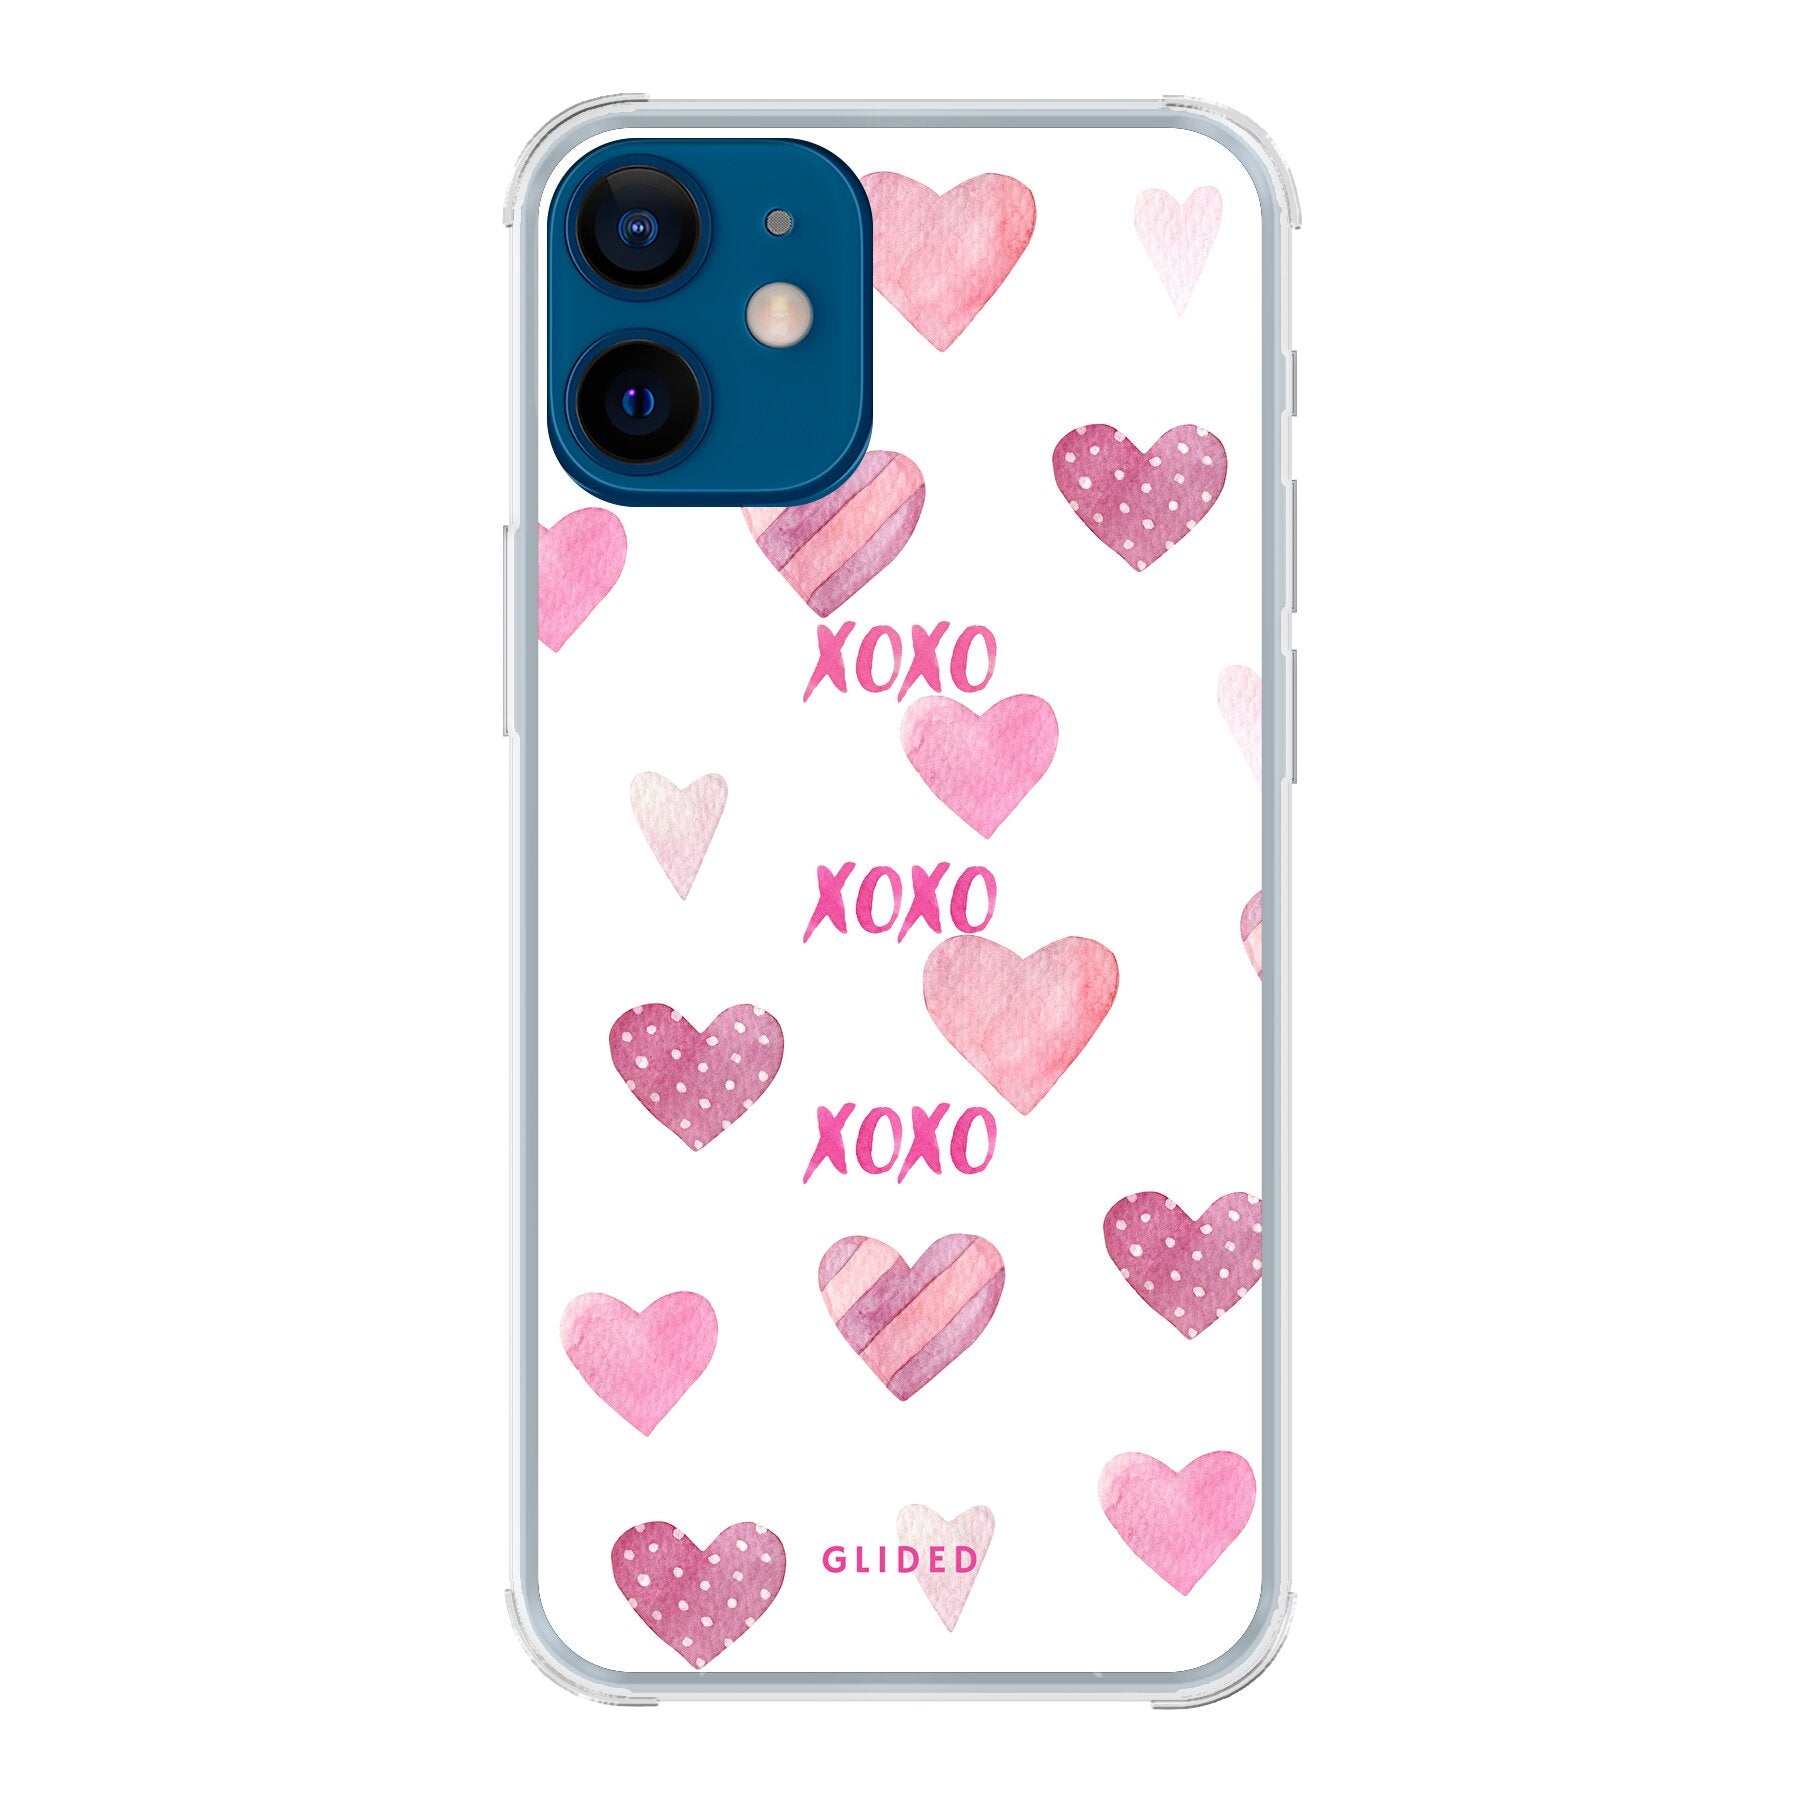 Xoxo - iPhone 12 mini - Bumper case